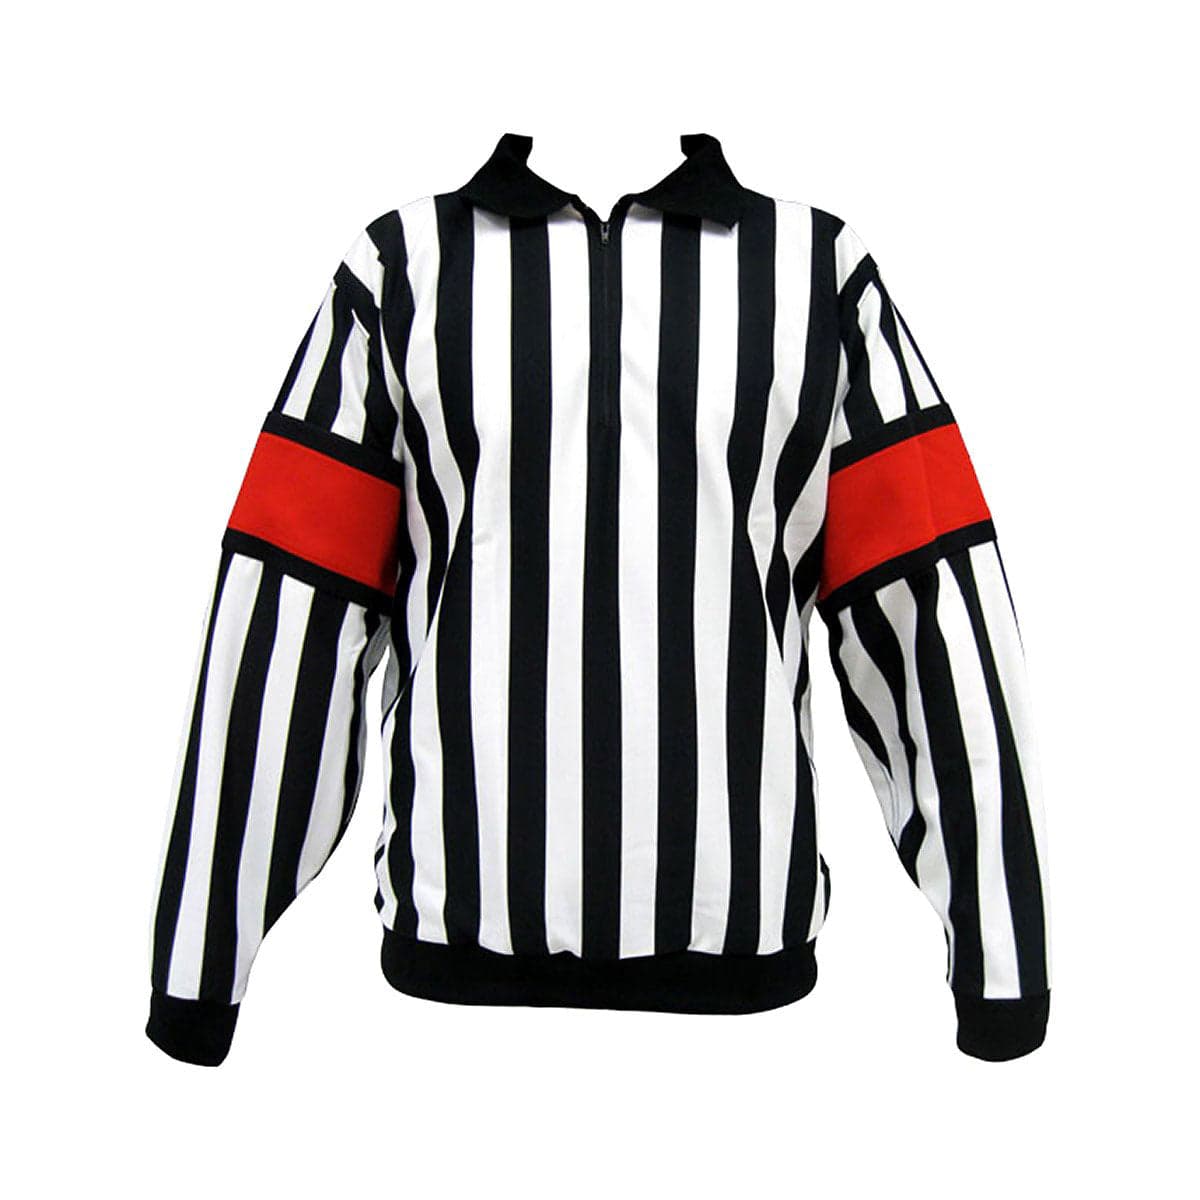 CCM/Maska Boston Bruins Hockey Jersey, size Medium, stitched/sewn